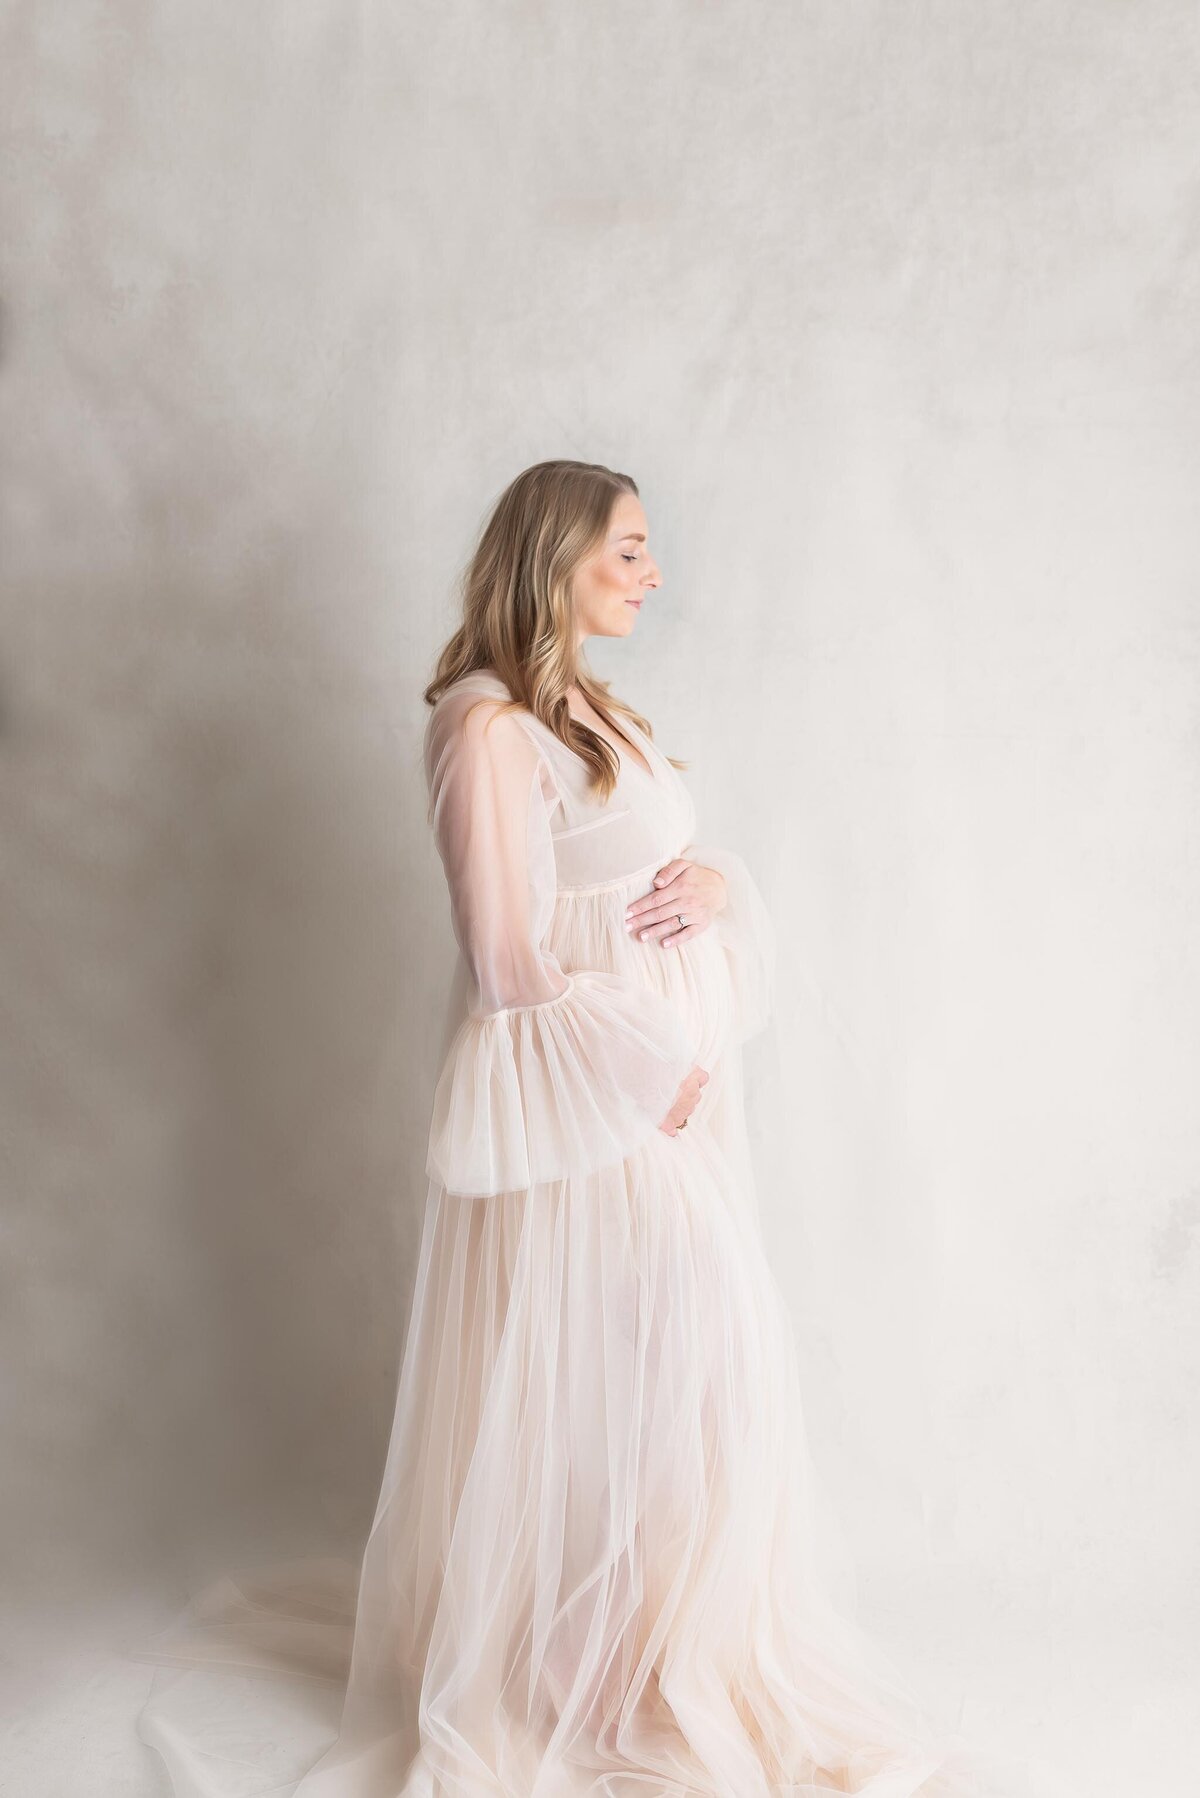 Maternity - Studio- Houston newborn photographer